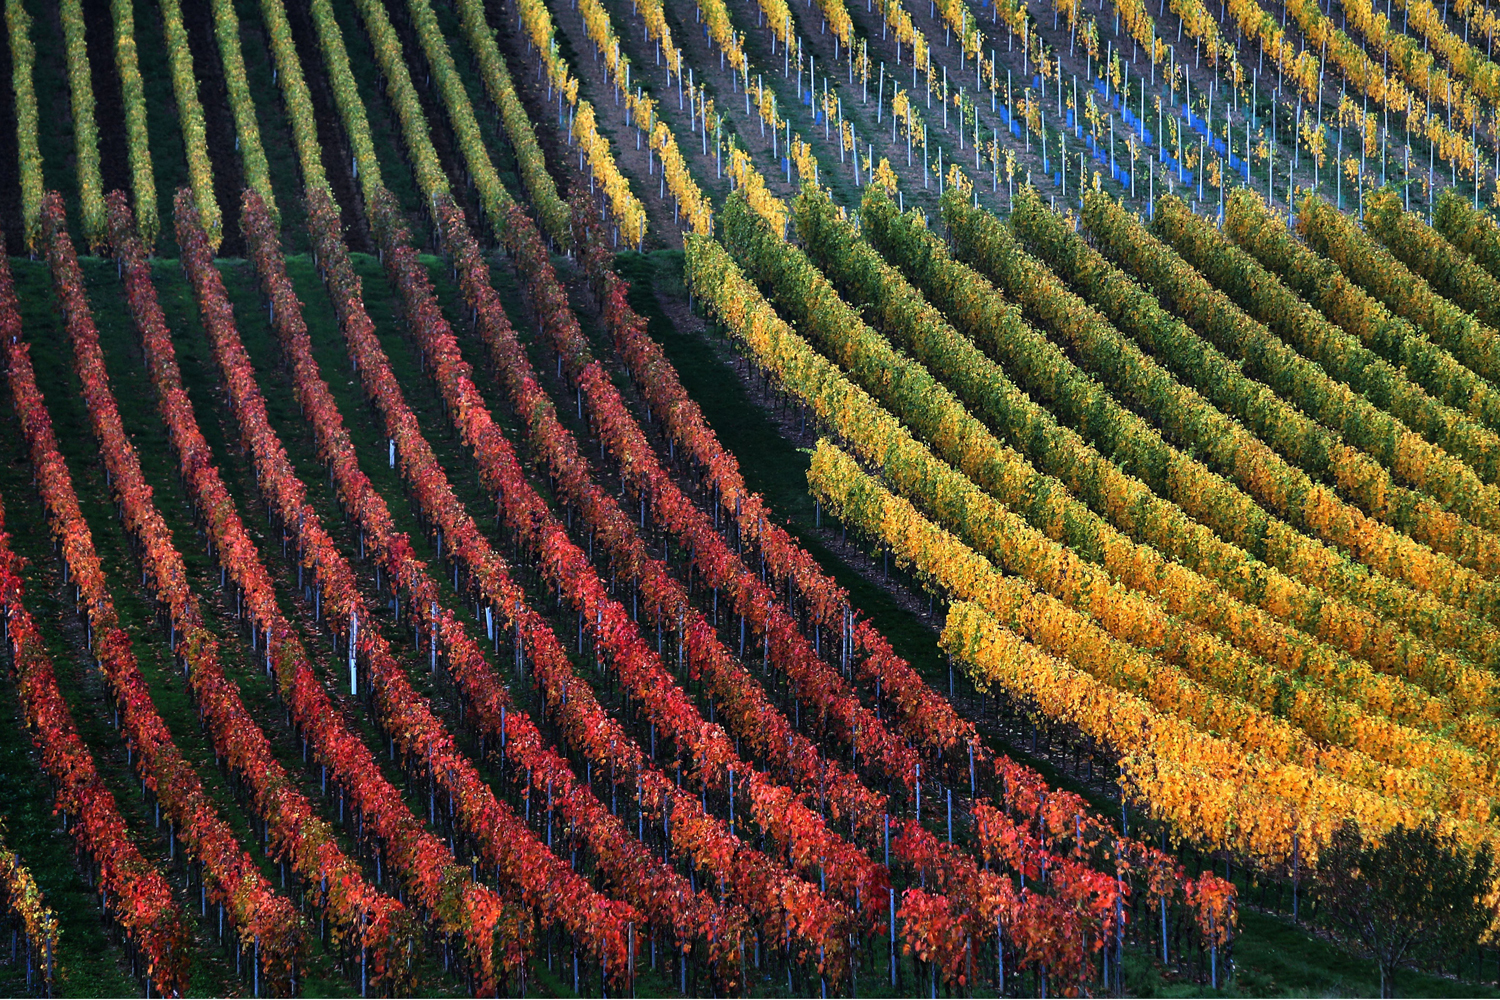 Oct. 30, 2013. Fall-colored vineyards near Marktbreit, Germany.